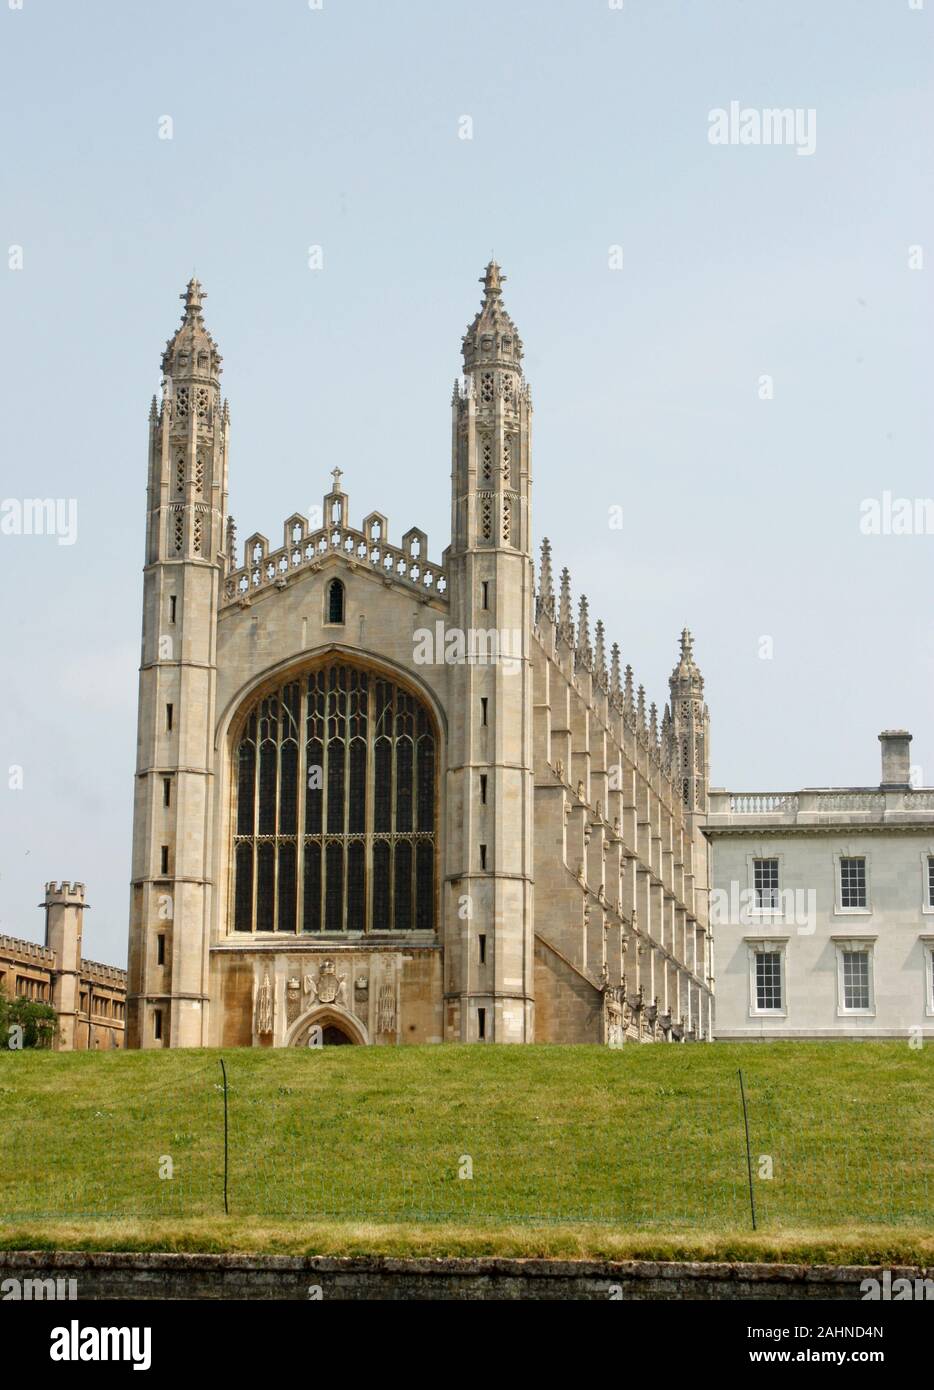 King's College Chapel at university of Cambridge Stock Photo